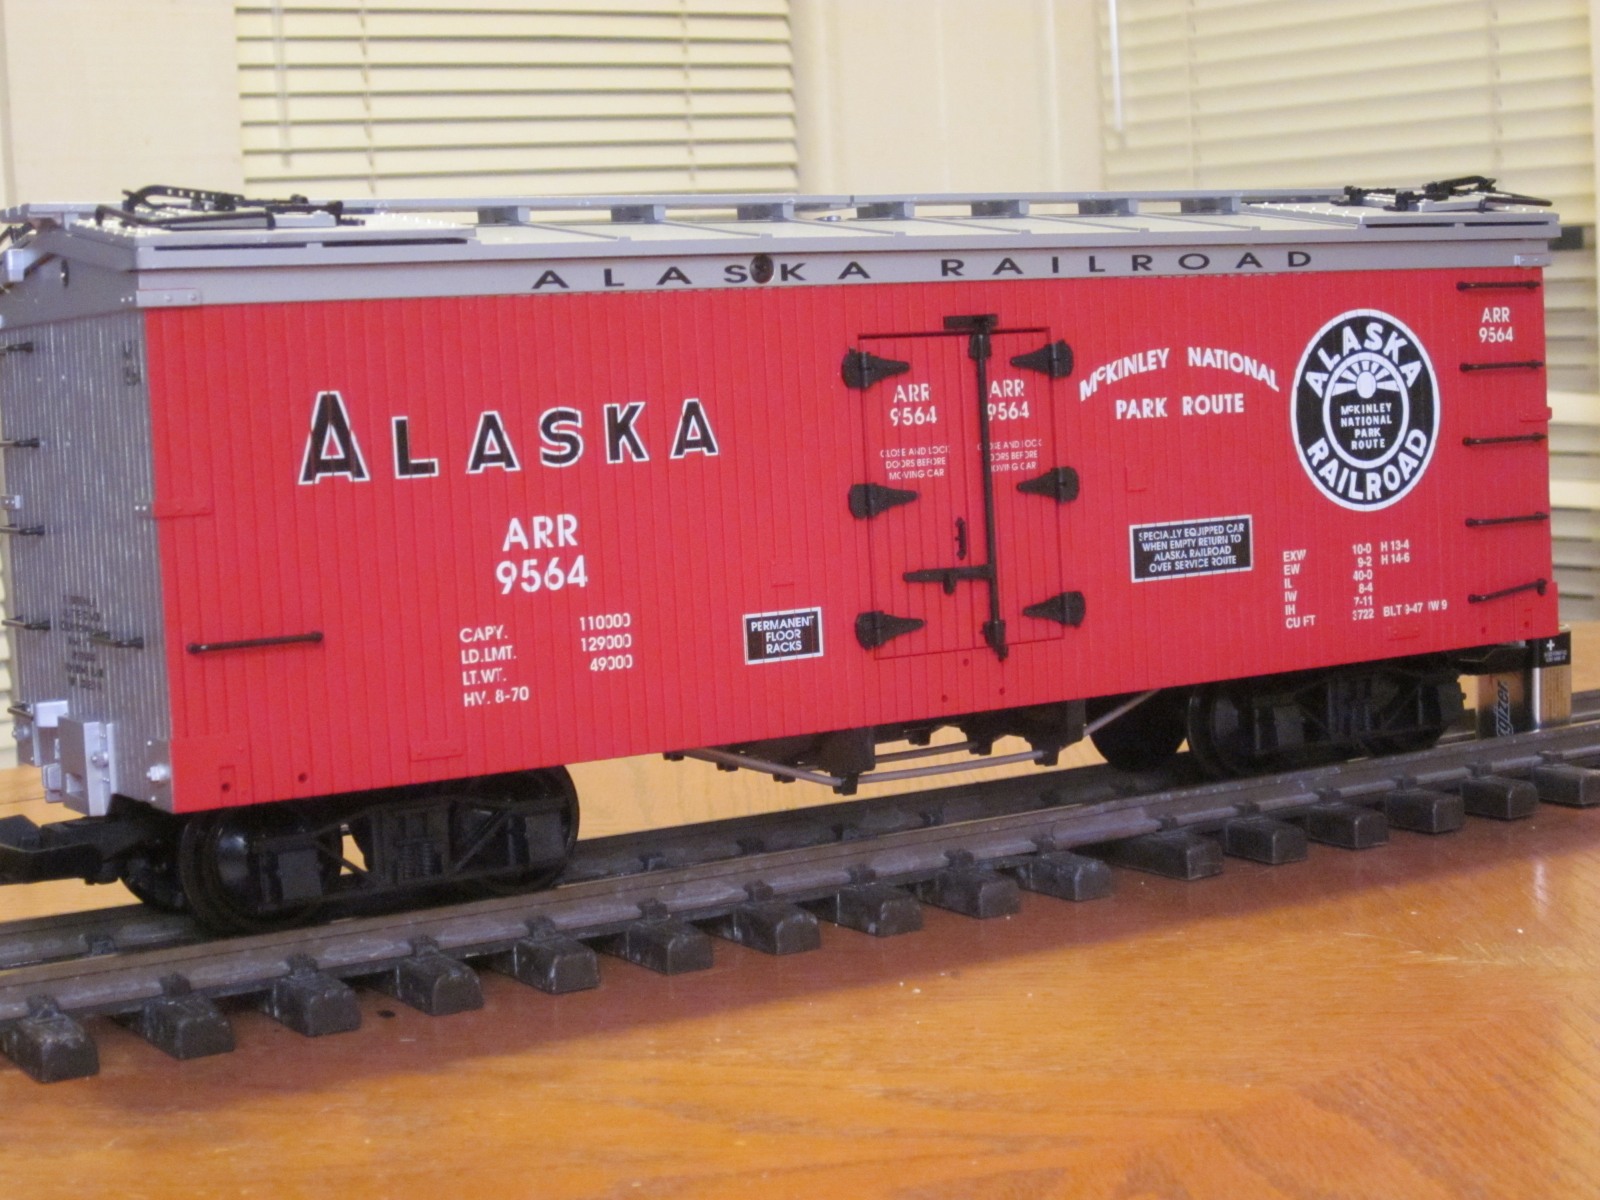 R16204D Alaska RR (Red Silver) ARR 9564